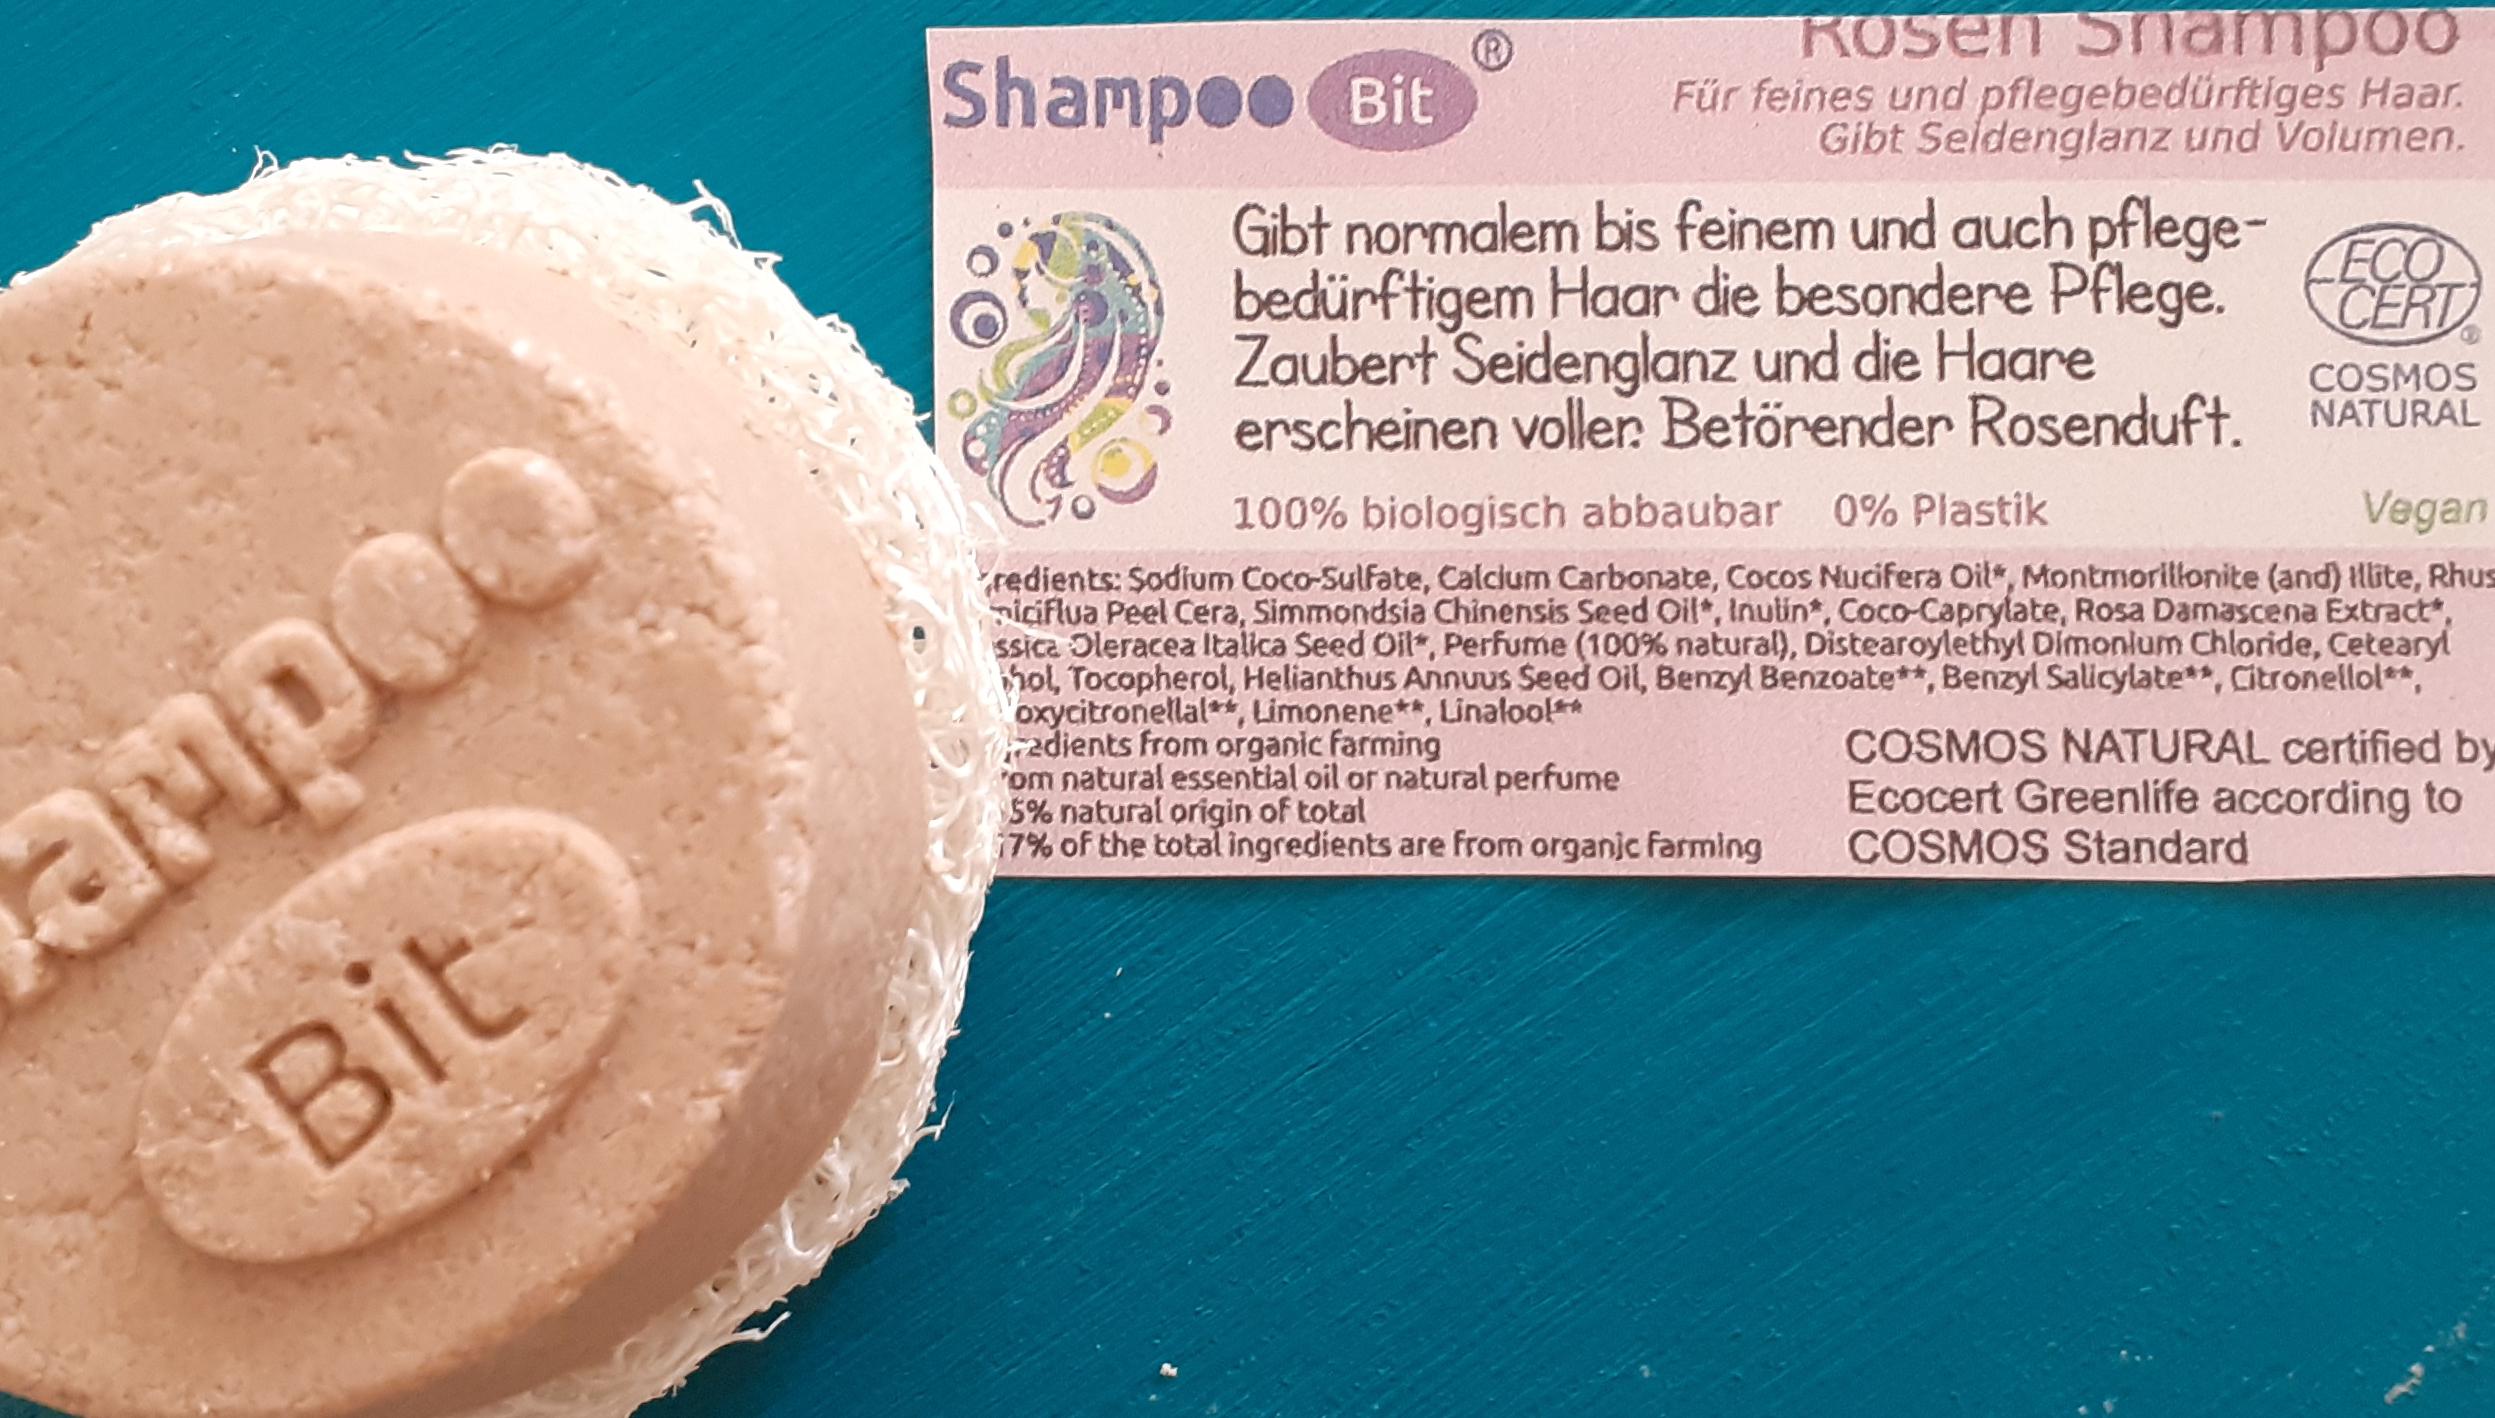 Shampoo Bit von Rosenrot, Rose